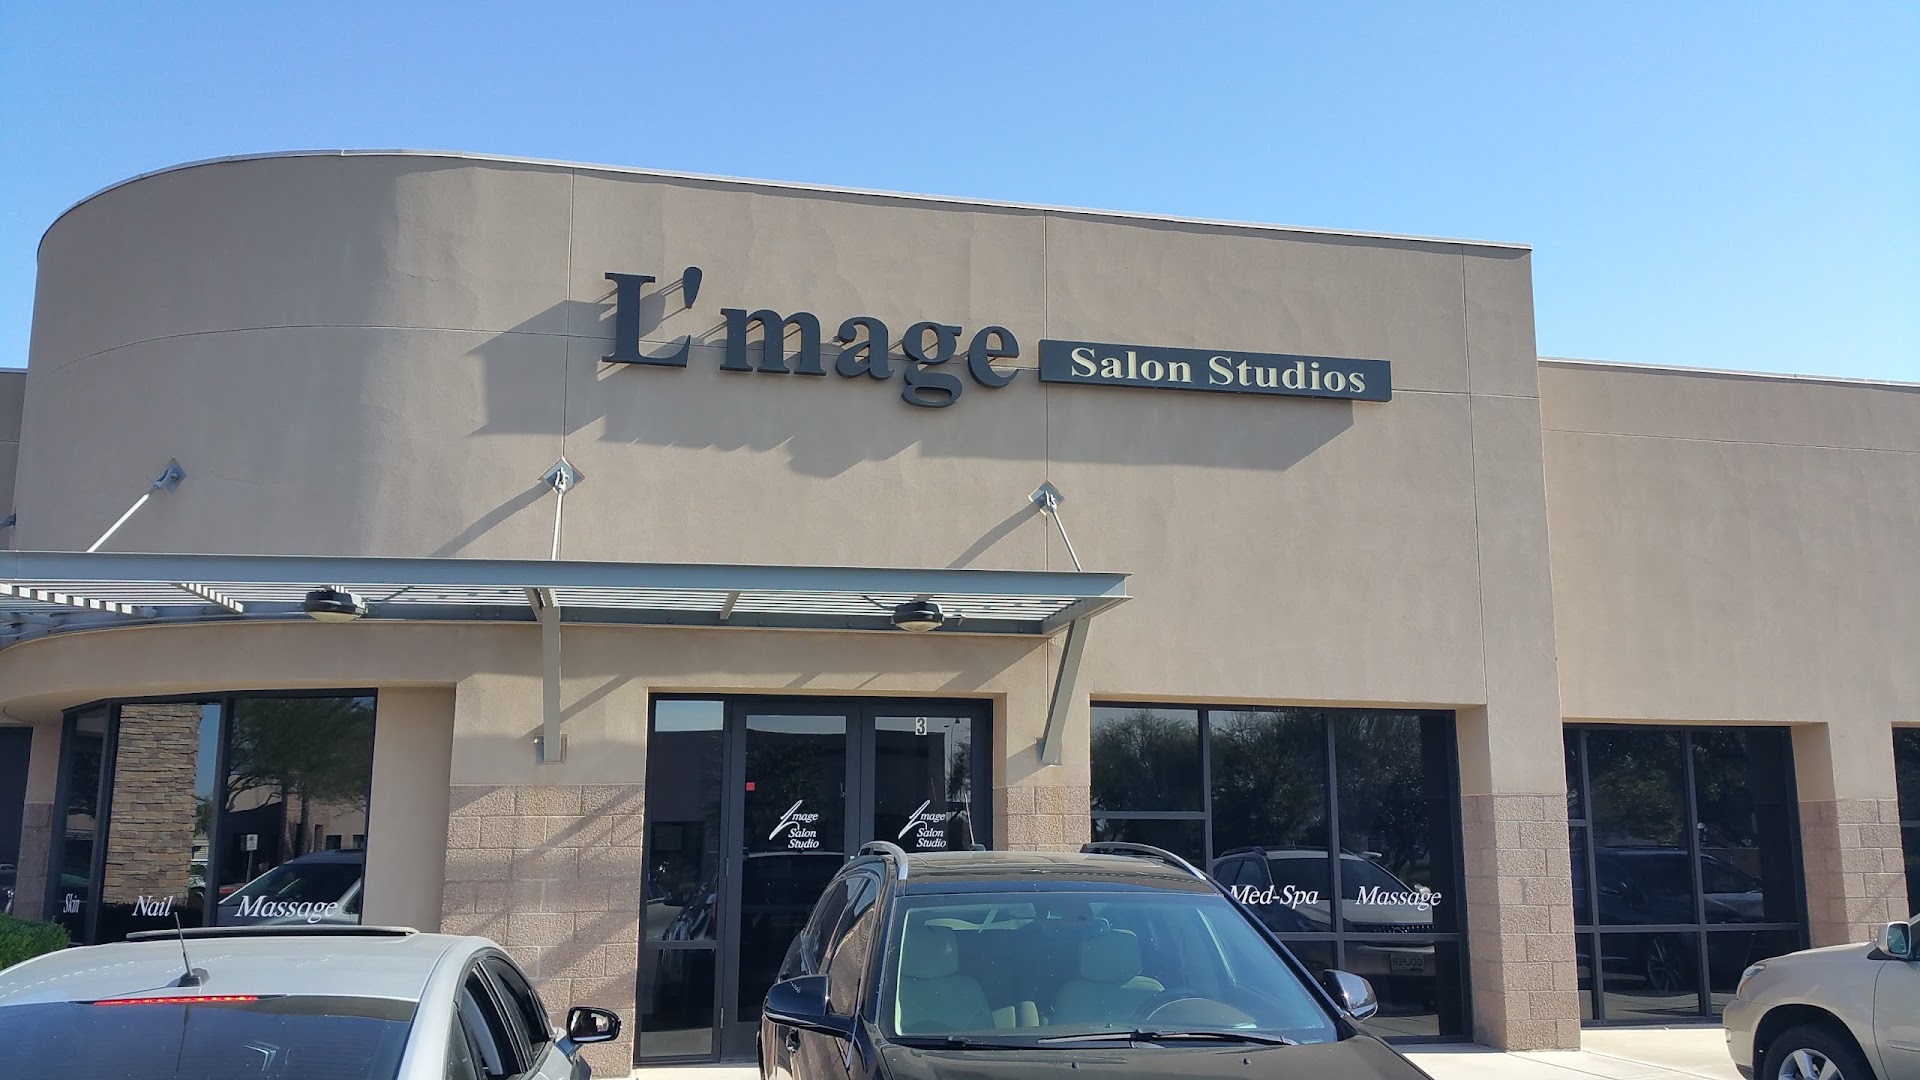 Signature Salon Studios